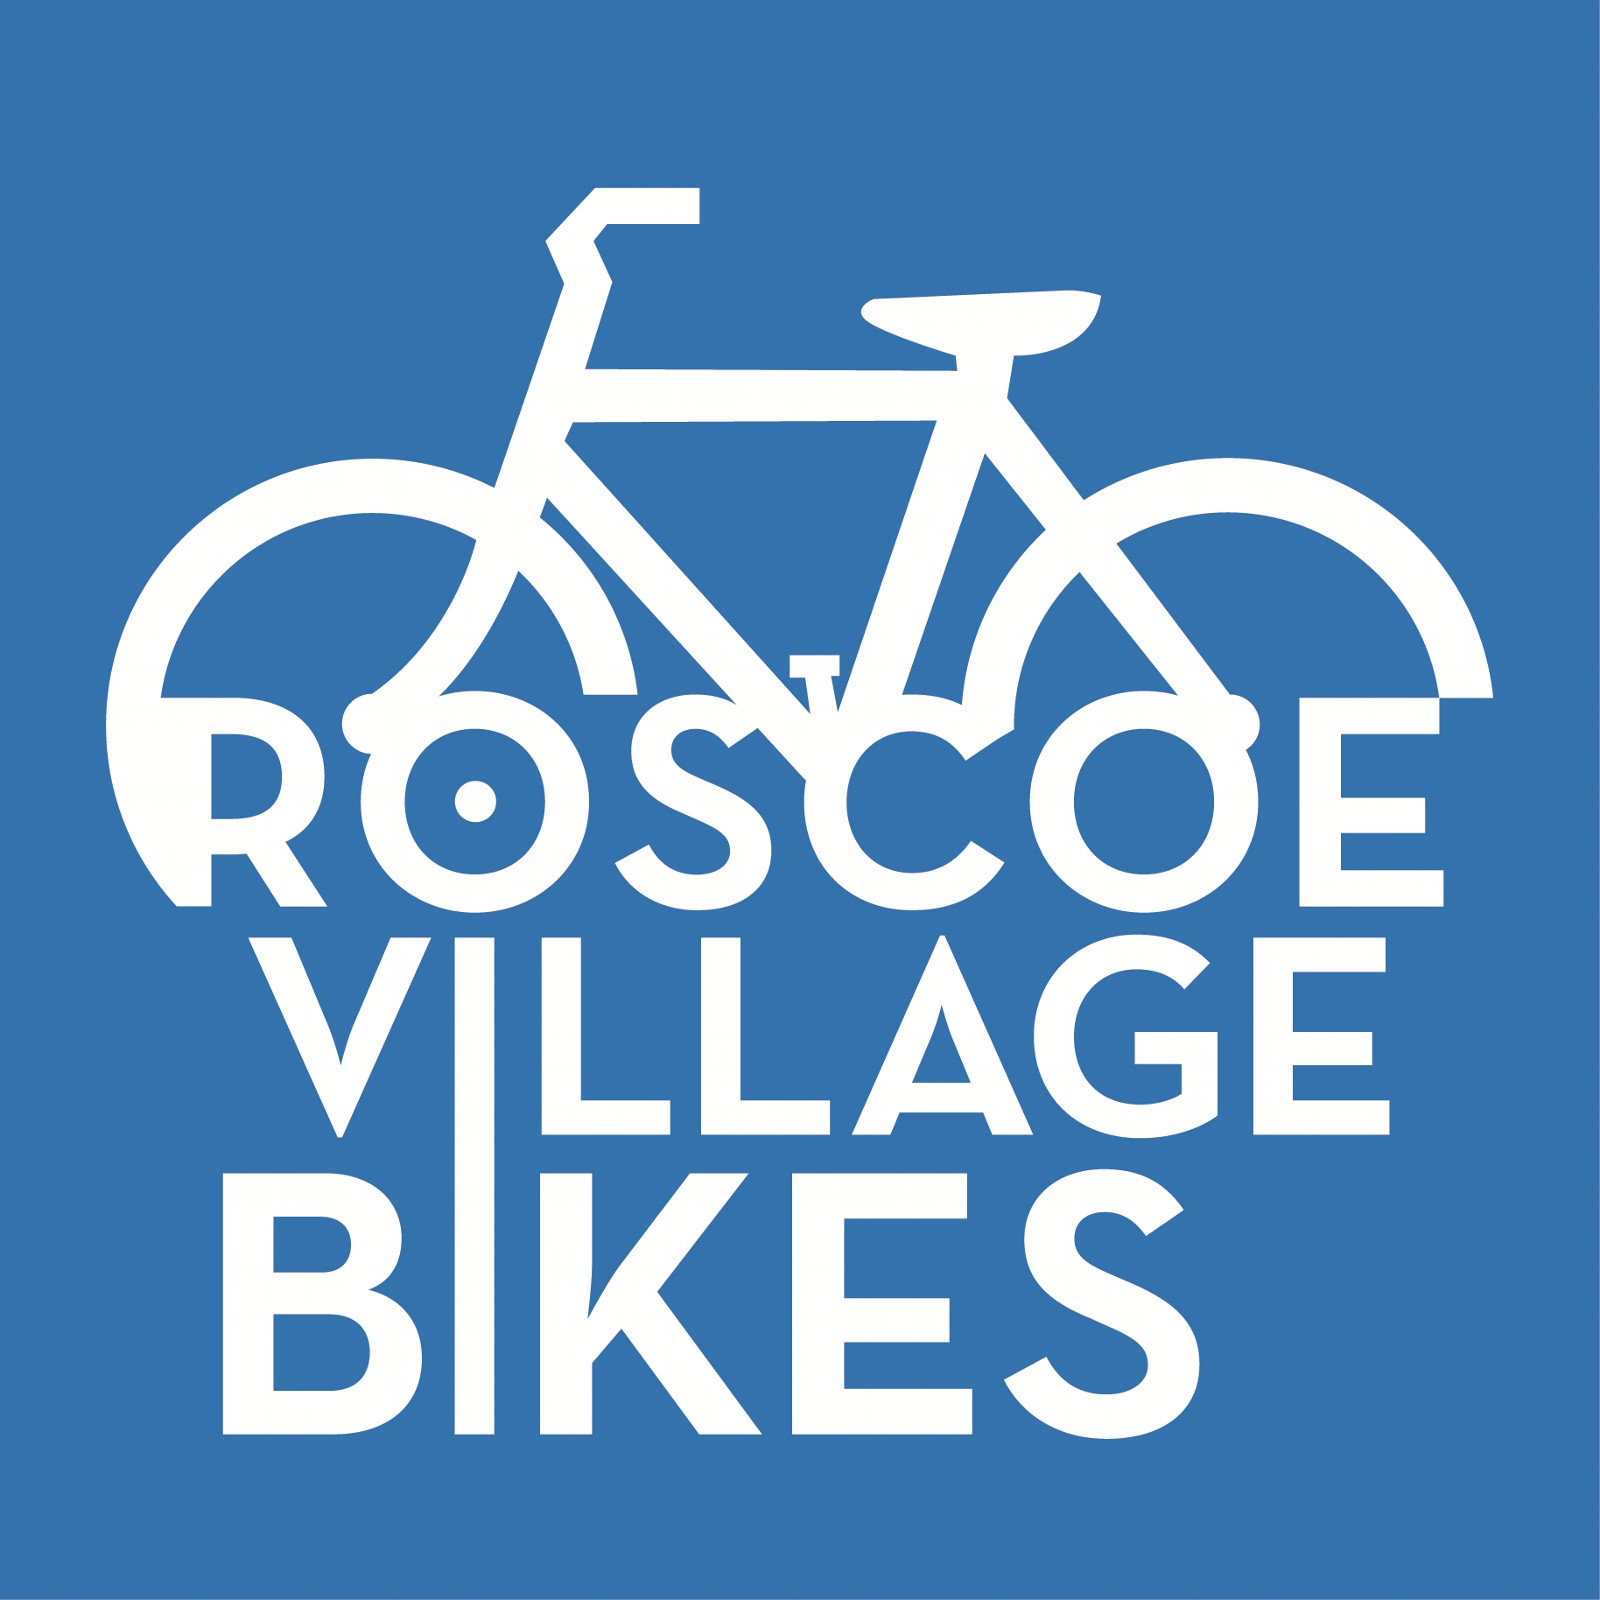 Roscoe Village Bikes